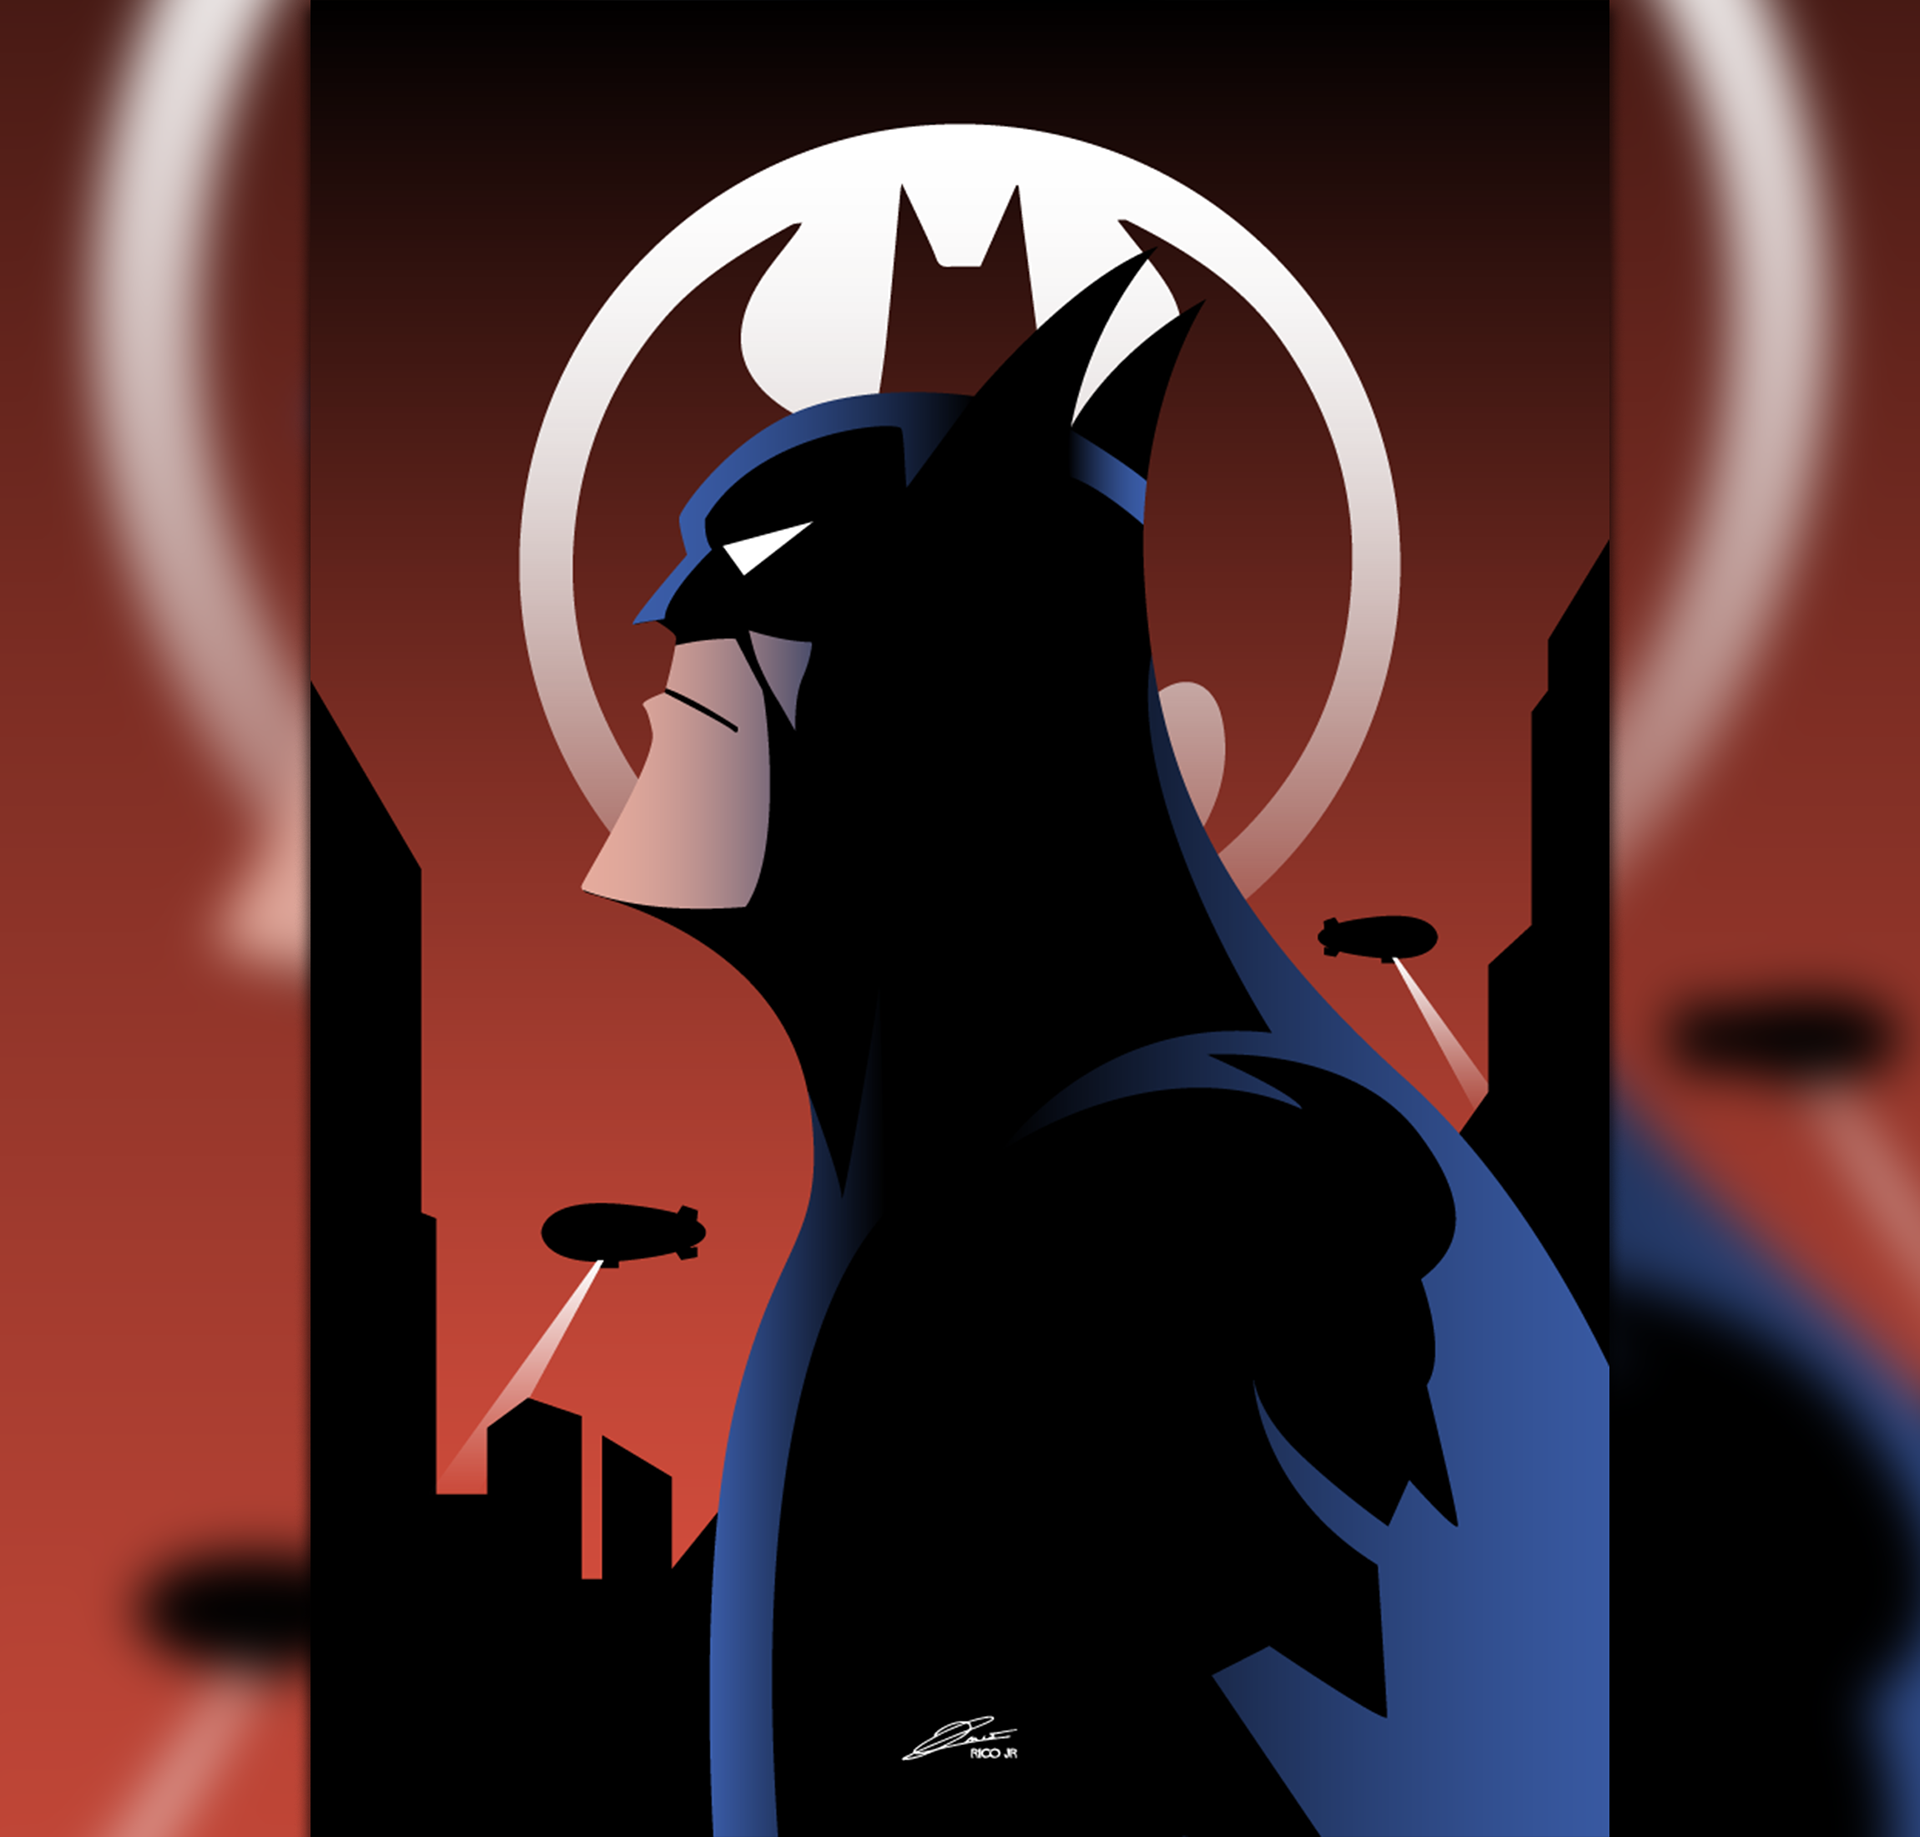 BATMAN/SUPERMAN Animated Series Poster Art on Behance